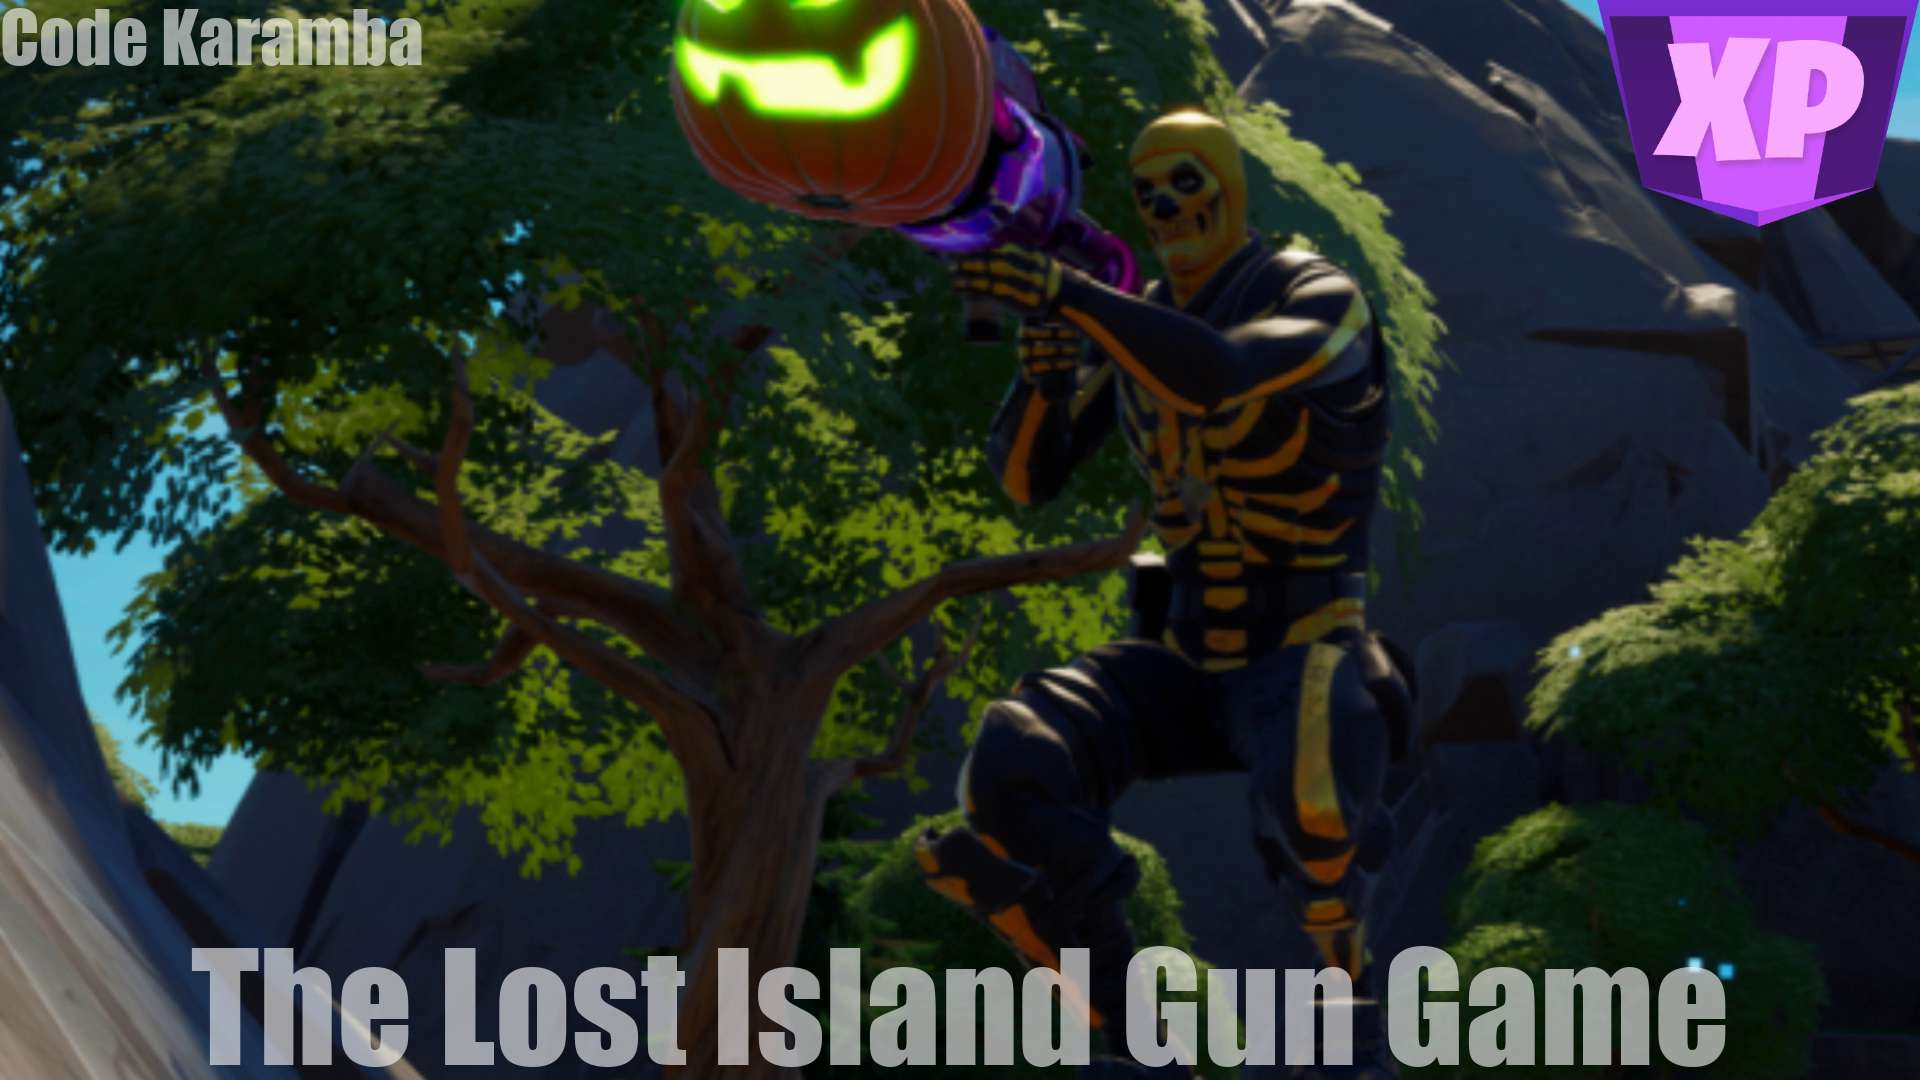 THE LOST ISLAND GUN GAME